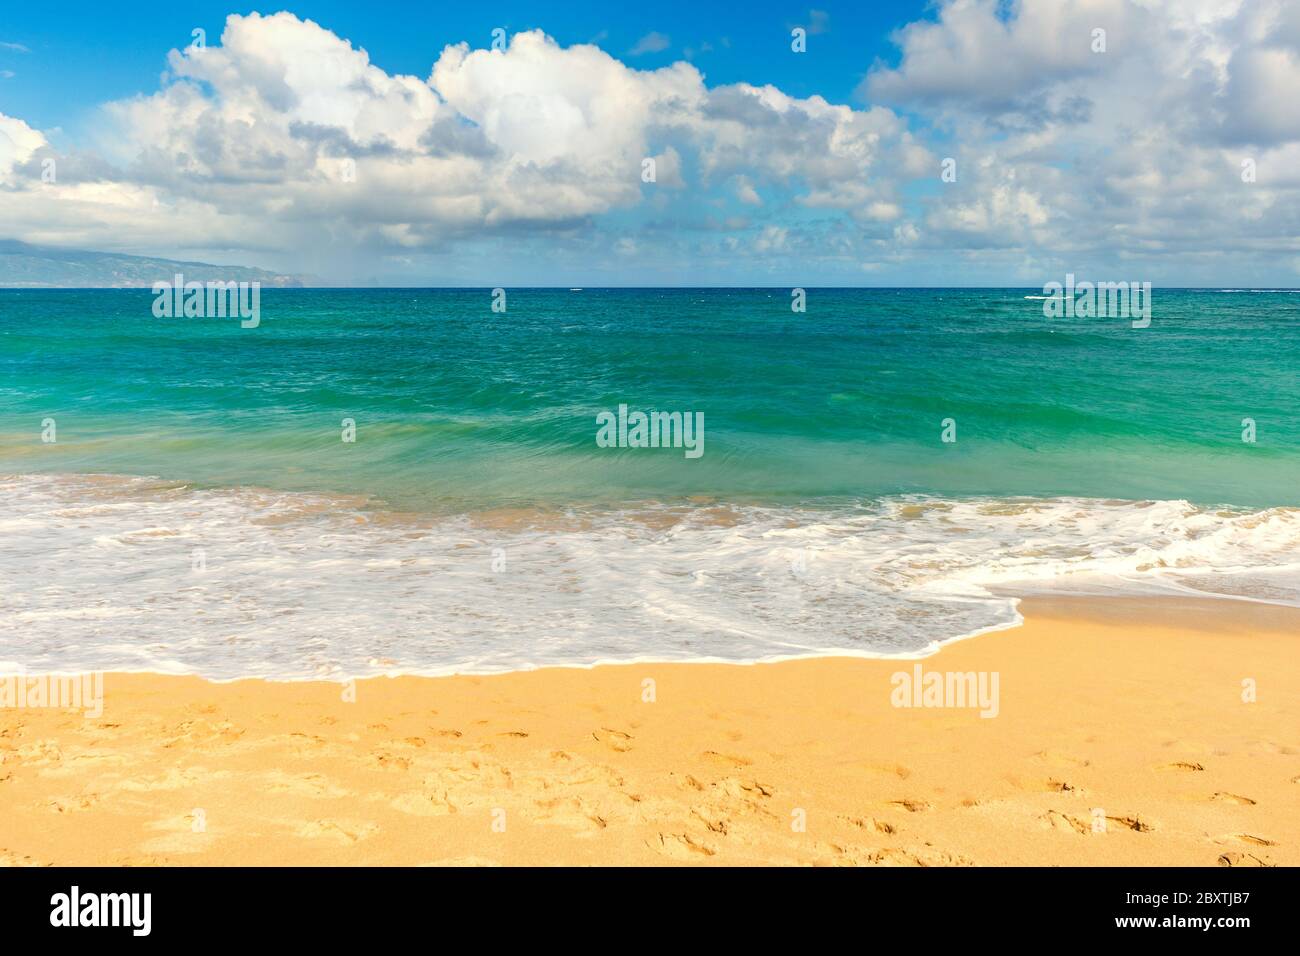 A sandy beach with clouds on the Hawaiian Island of Maui. Stock Photo